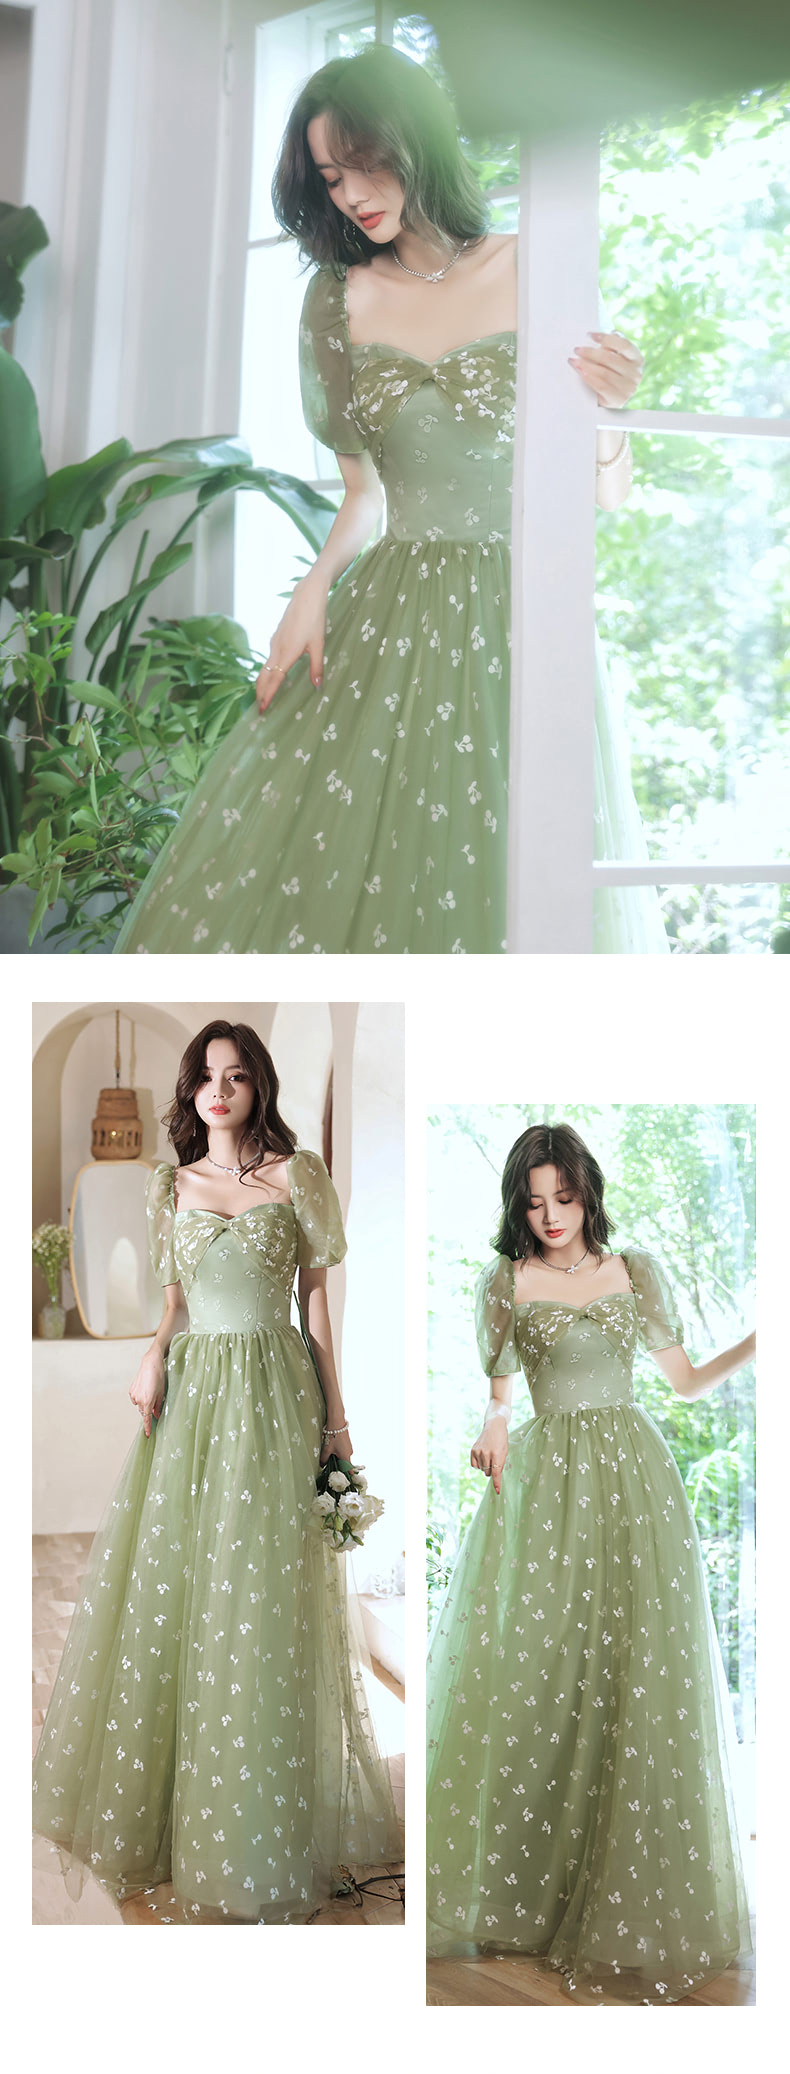 Luxury-Fashion-Green-Tulle-Prom-Party-Dress-Elegant-Formal-Wear11.jpg